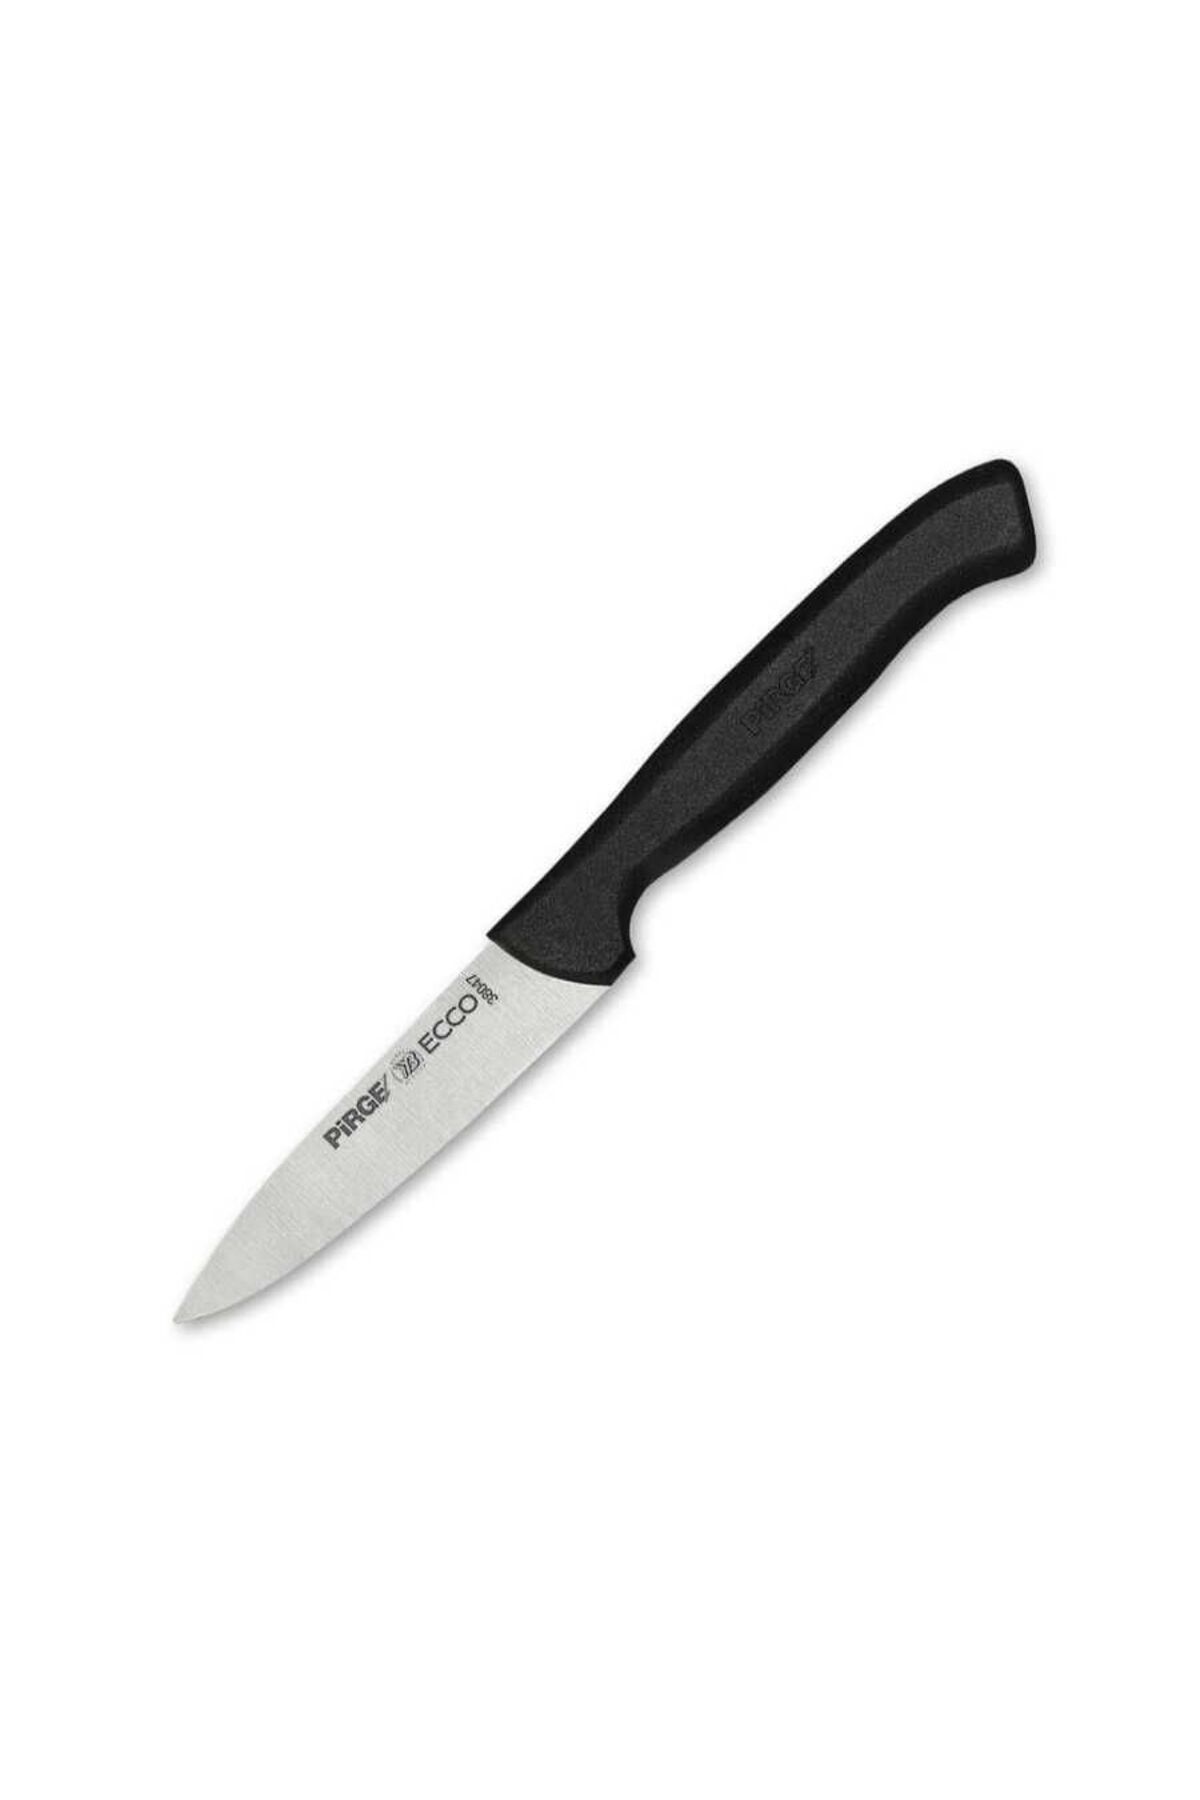 Pirge Pirge Ecco Sivri Sebze Bıçağı 9 Cm 38047